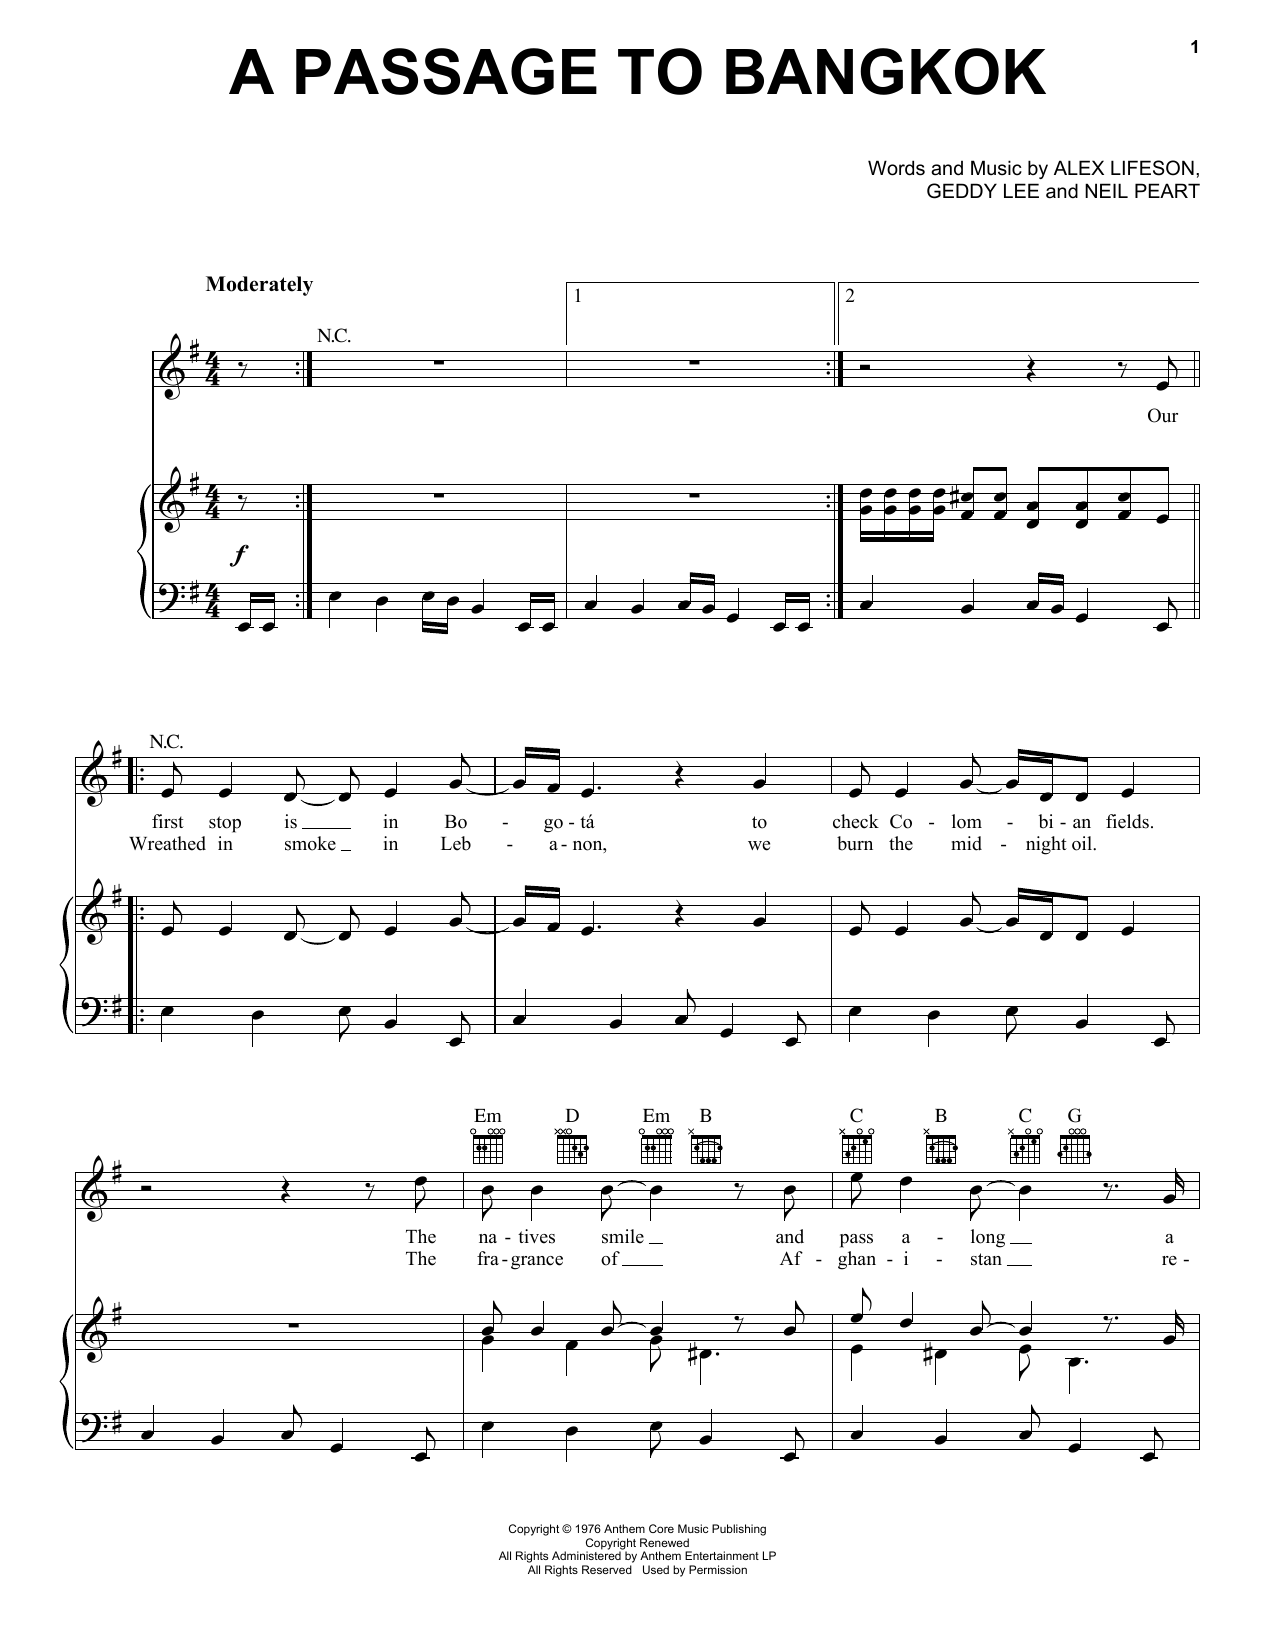 Rush A Passage To Bangkok Sheet Music Notes & Chords for Piano, Vocal & Guitar (Right-Hand Melody) - Download or Print PDF